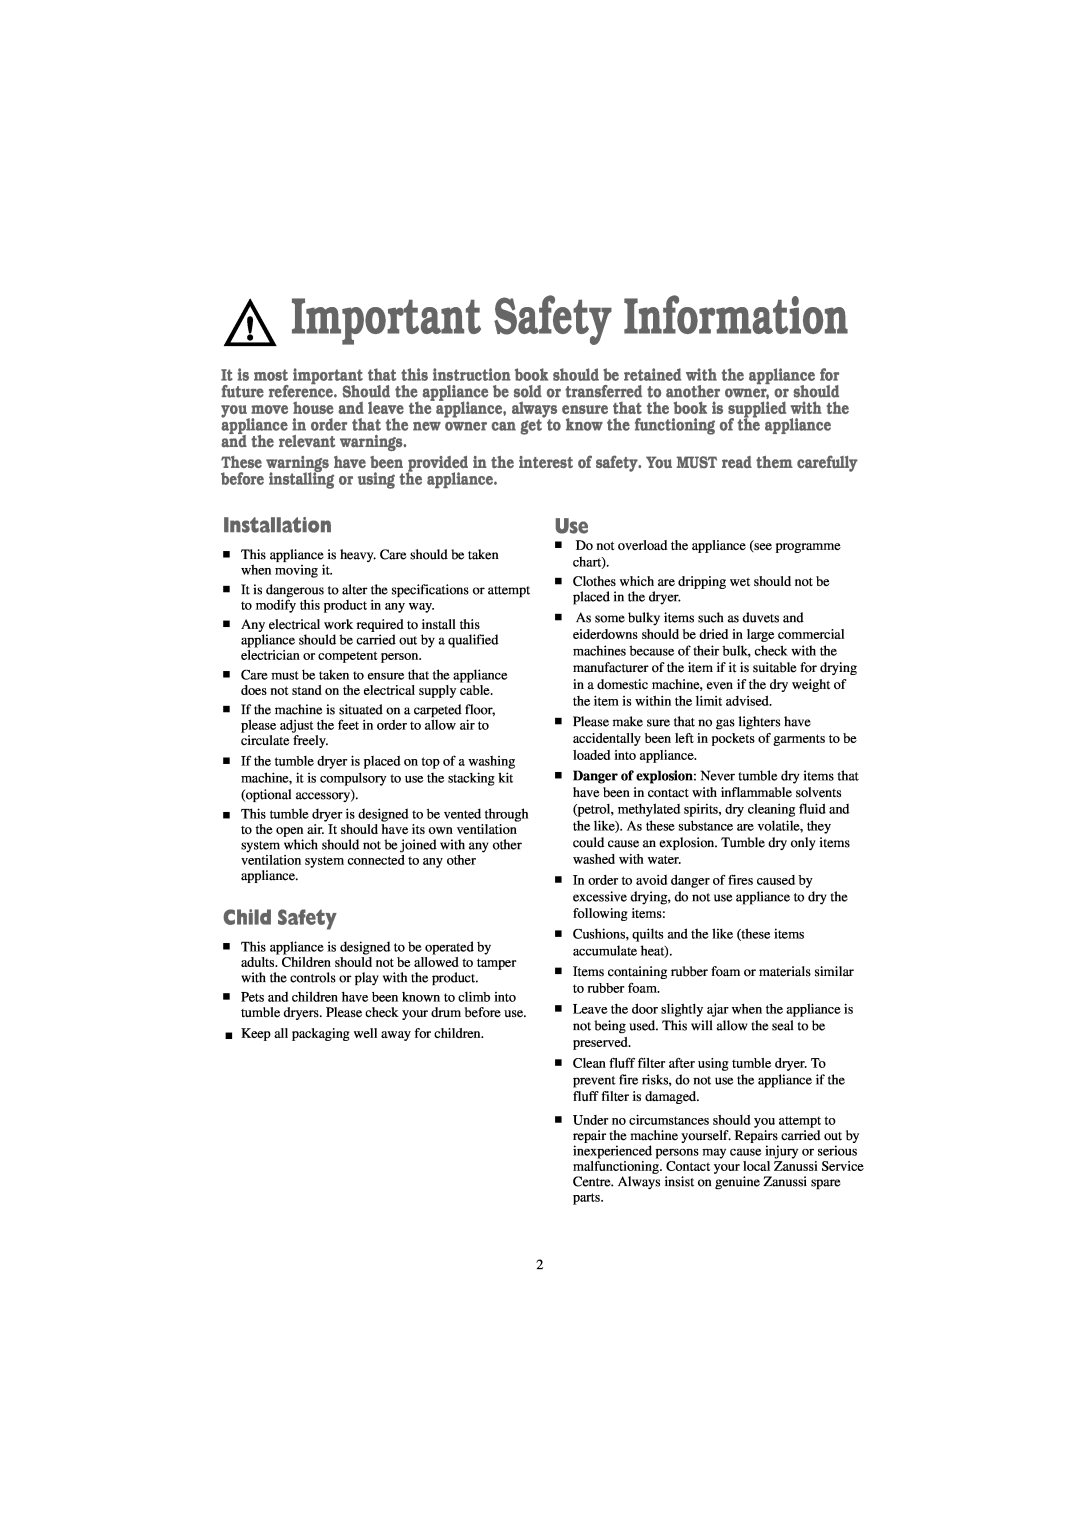 Zanussi TDS 281 W manual Installation, Child Safety, Important Safety Information 